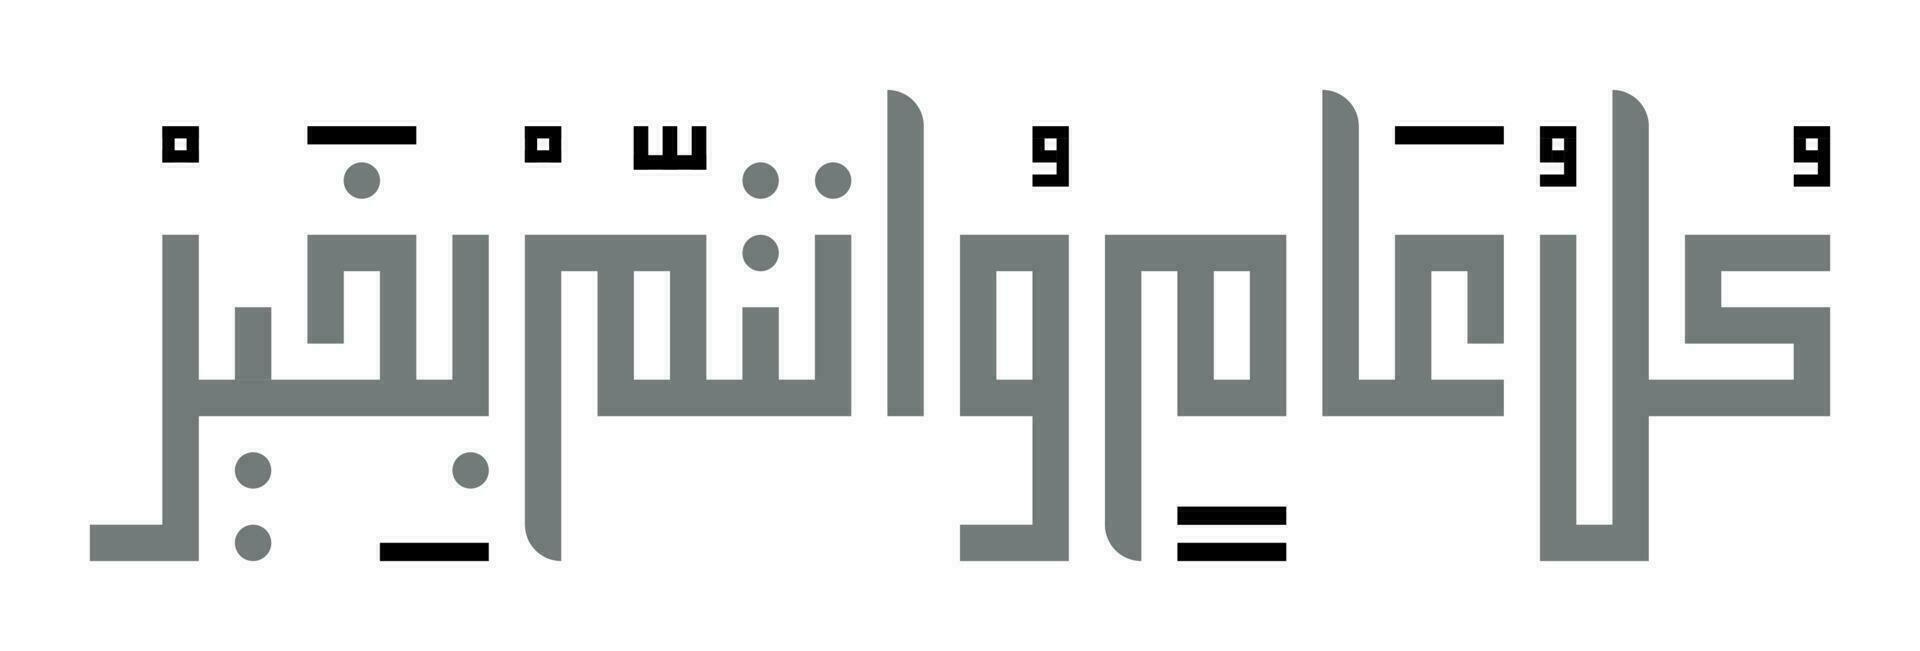 feliz Novo ano dentro árabe tipografia quadrado Kufic islâmico estilo. traduzido feliz Novo ano. vetor